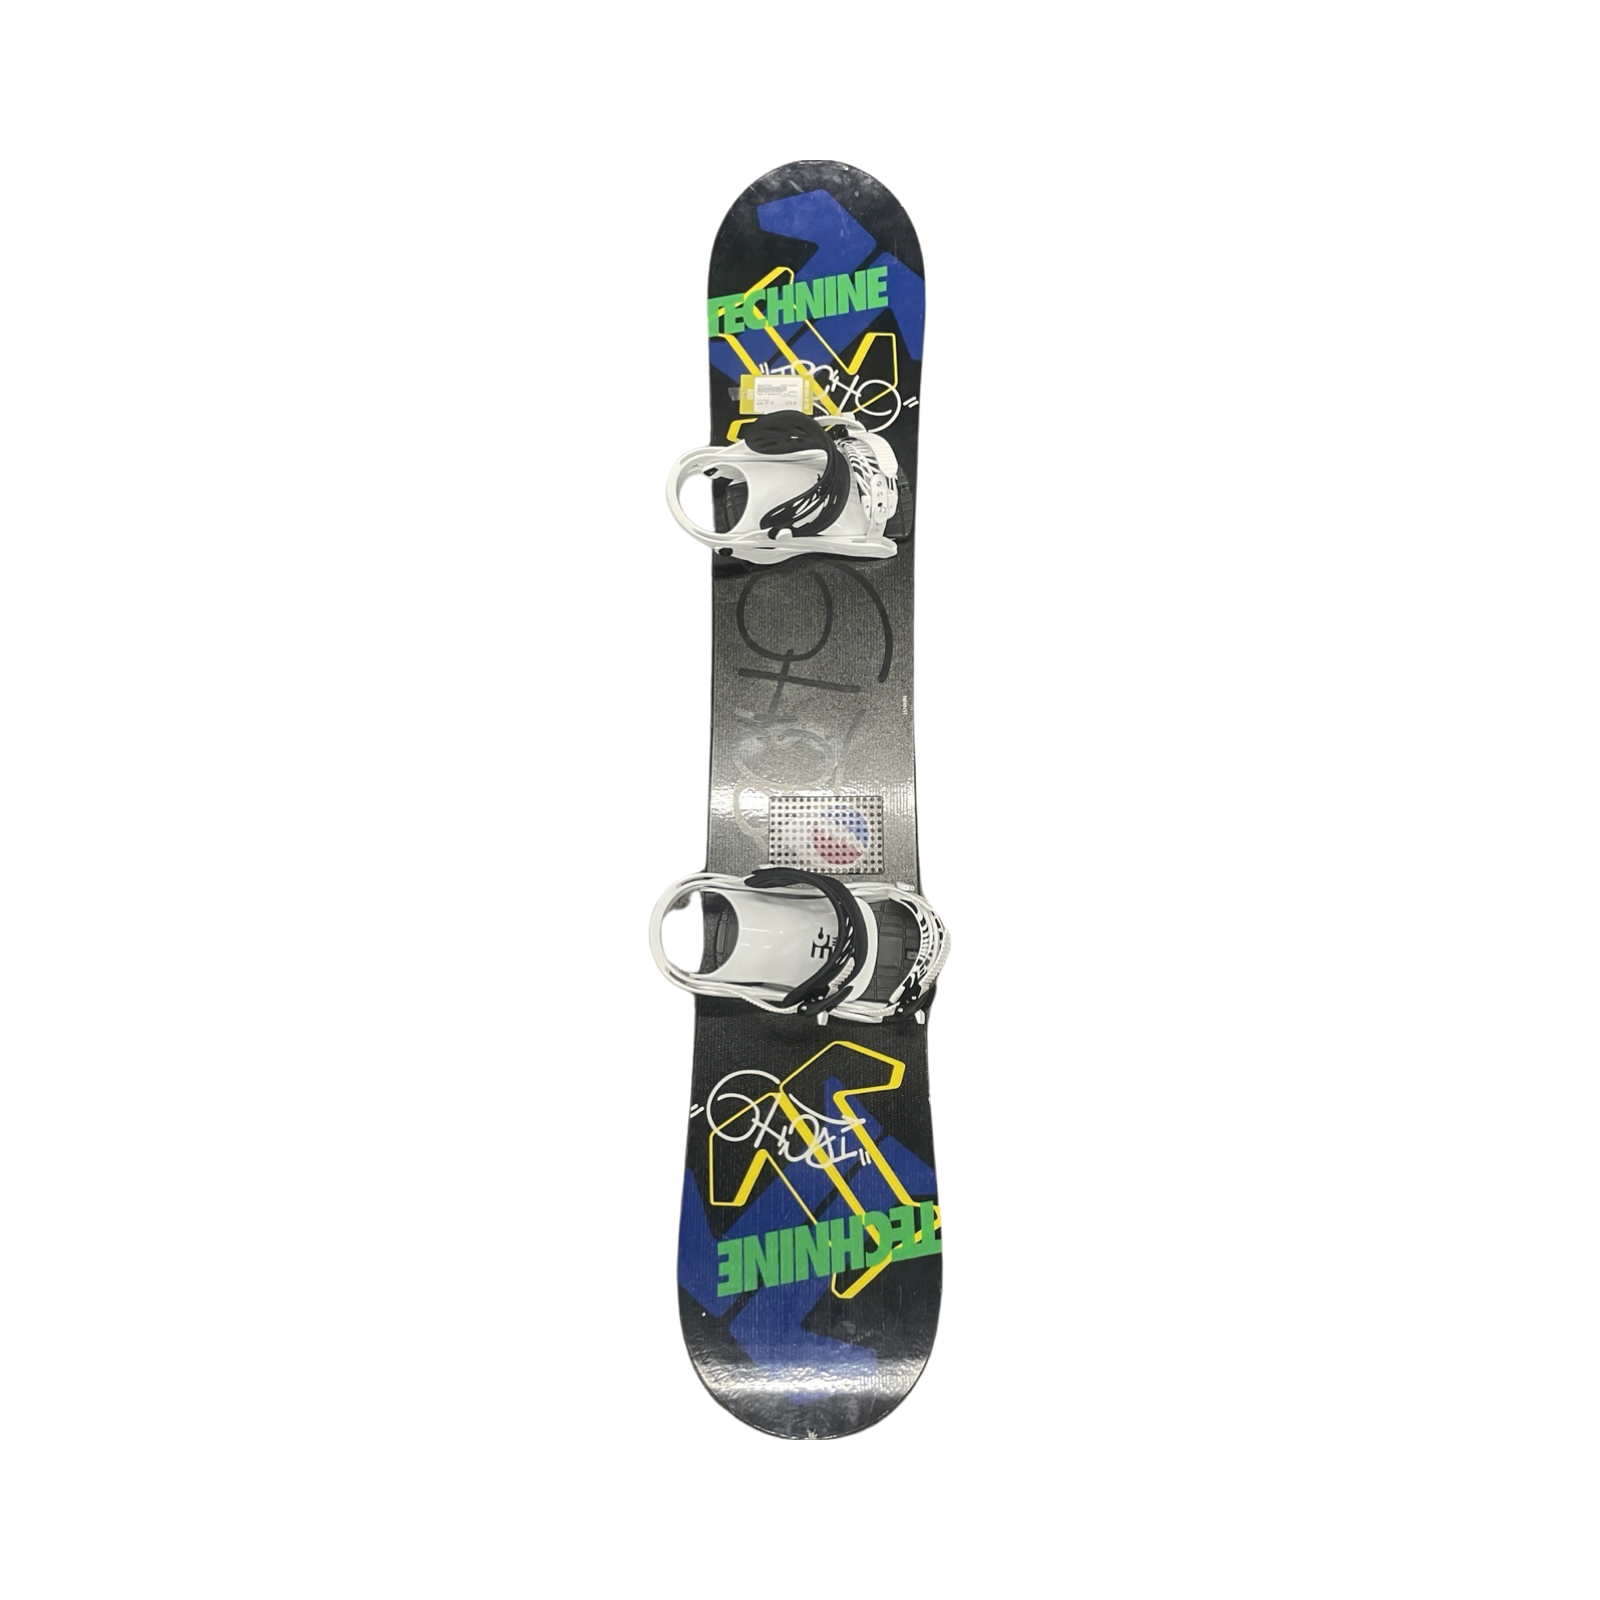 Used TECHNINE 157 cm Men's Snowboard Combo